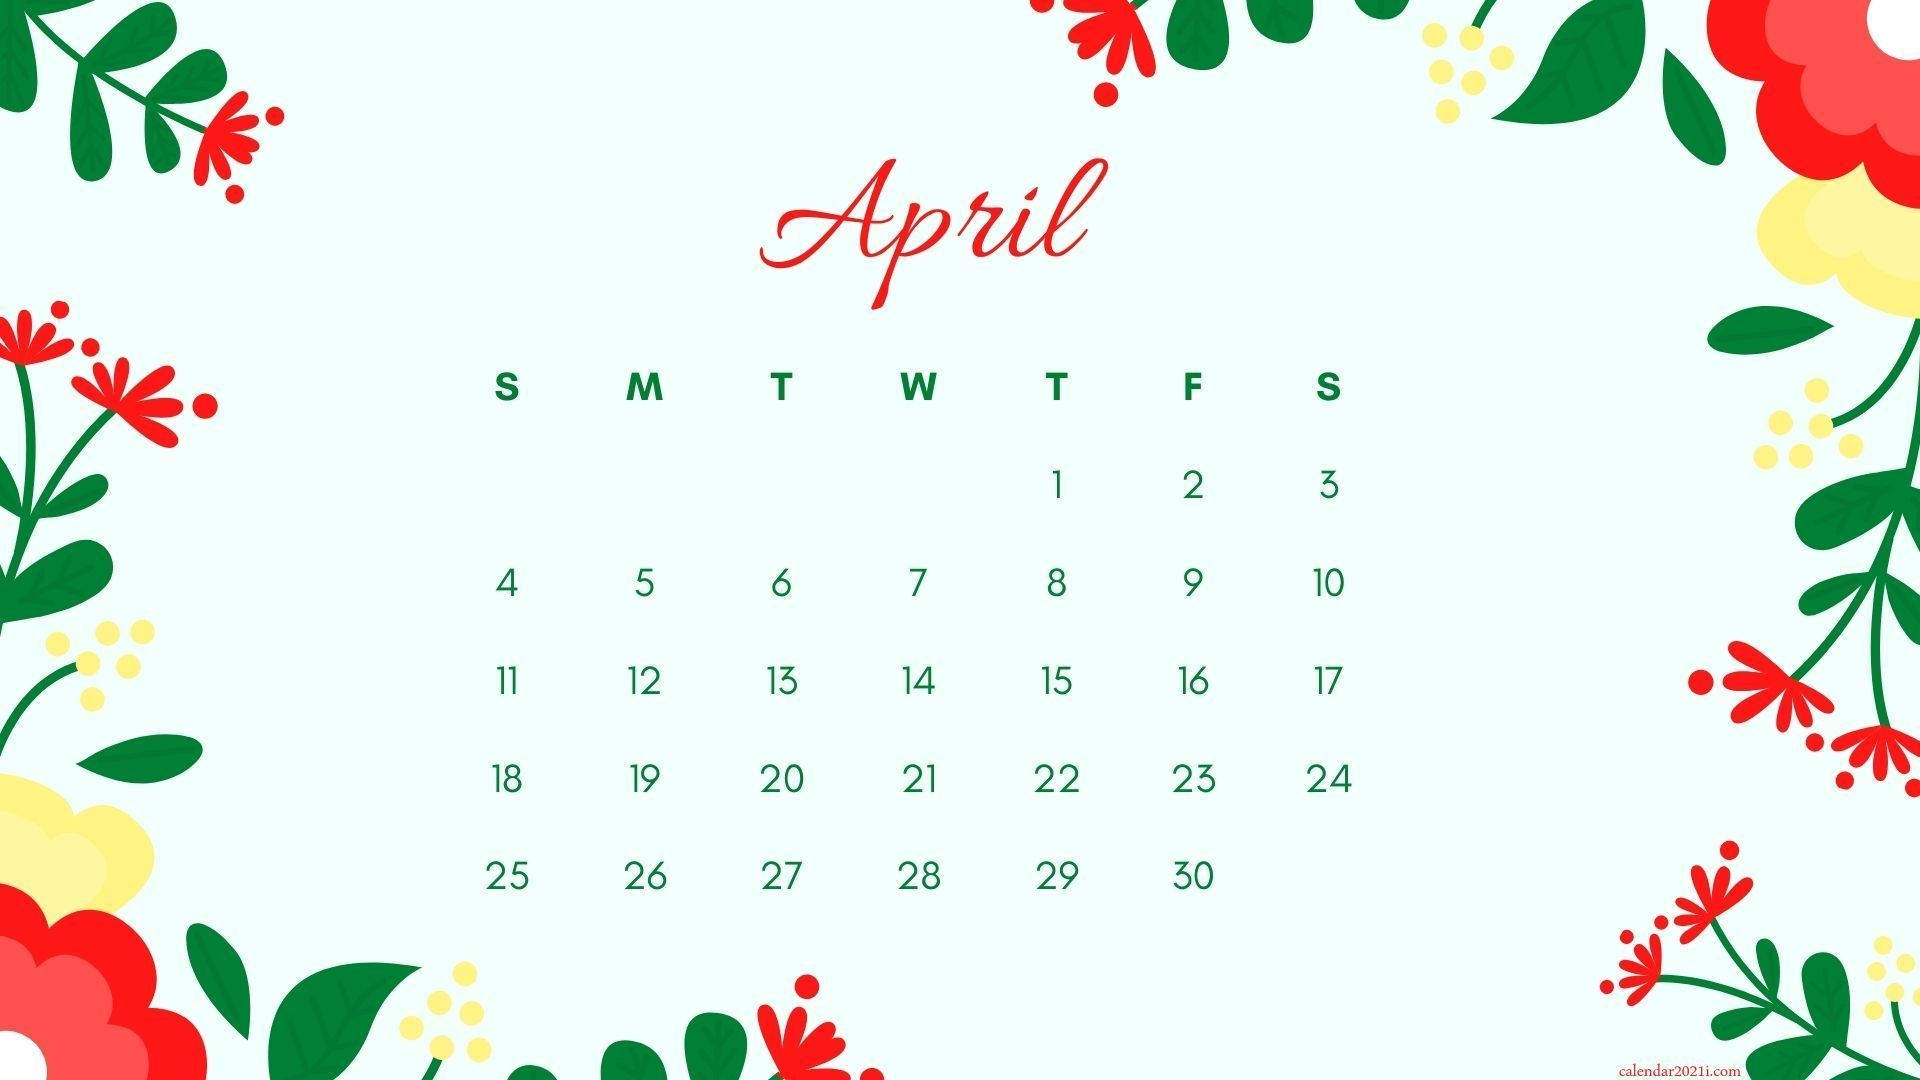 Celebrate April With A Beautiful Floral Calendar! Background